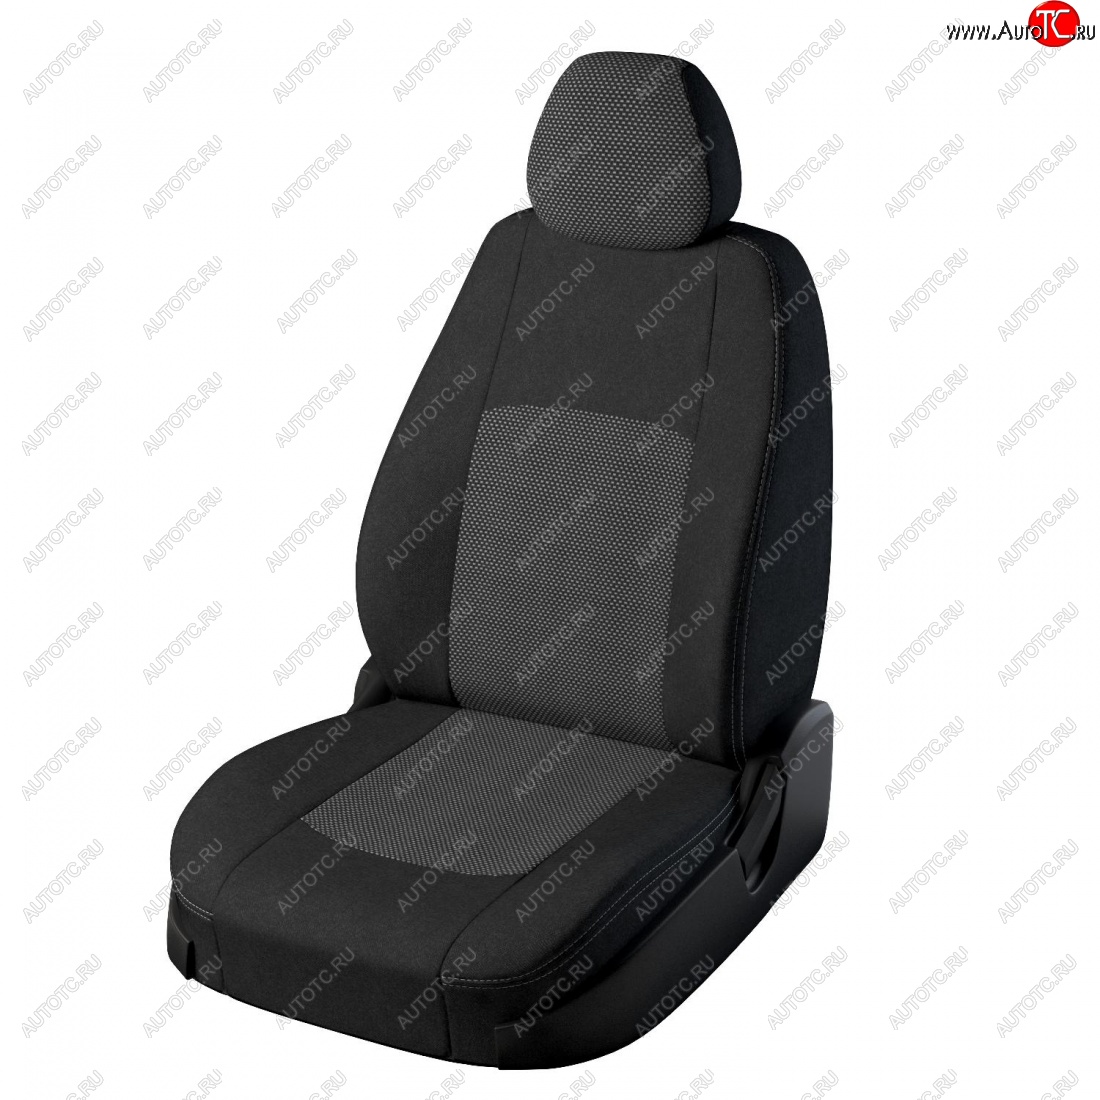 7 399 р. Чехлы для сидений Lord Autofashion Турин (экокожа, жаккард) Volkswagen Passat B5 универсал дорестайлинг (1996-2000) (Чёрный, вставка жаккард Тома серый)